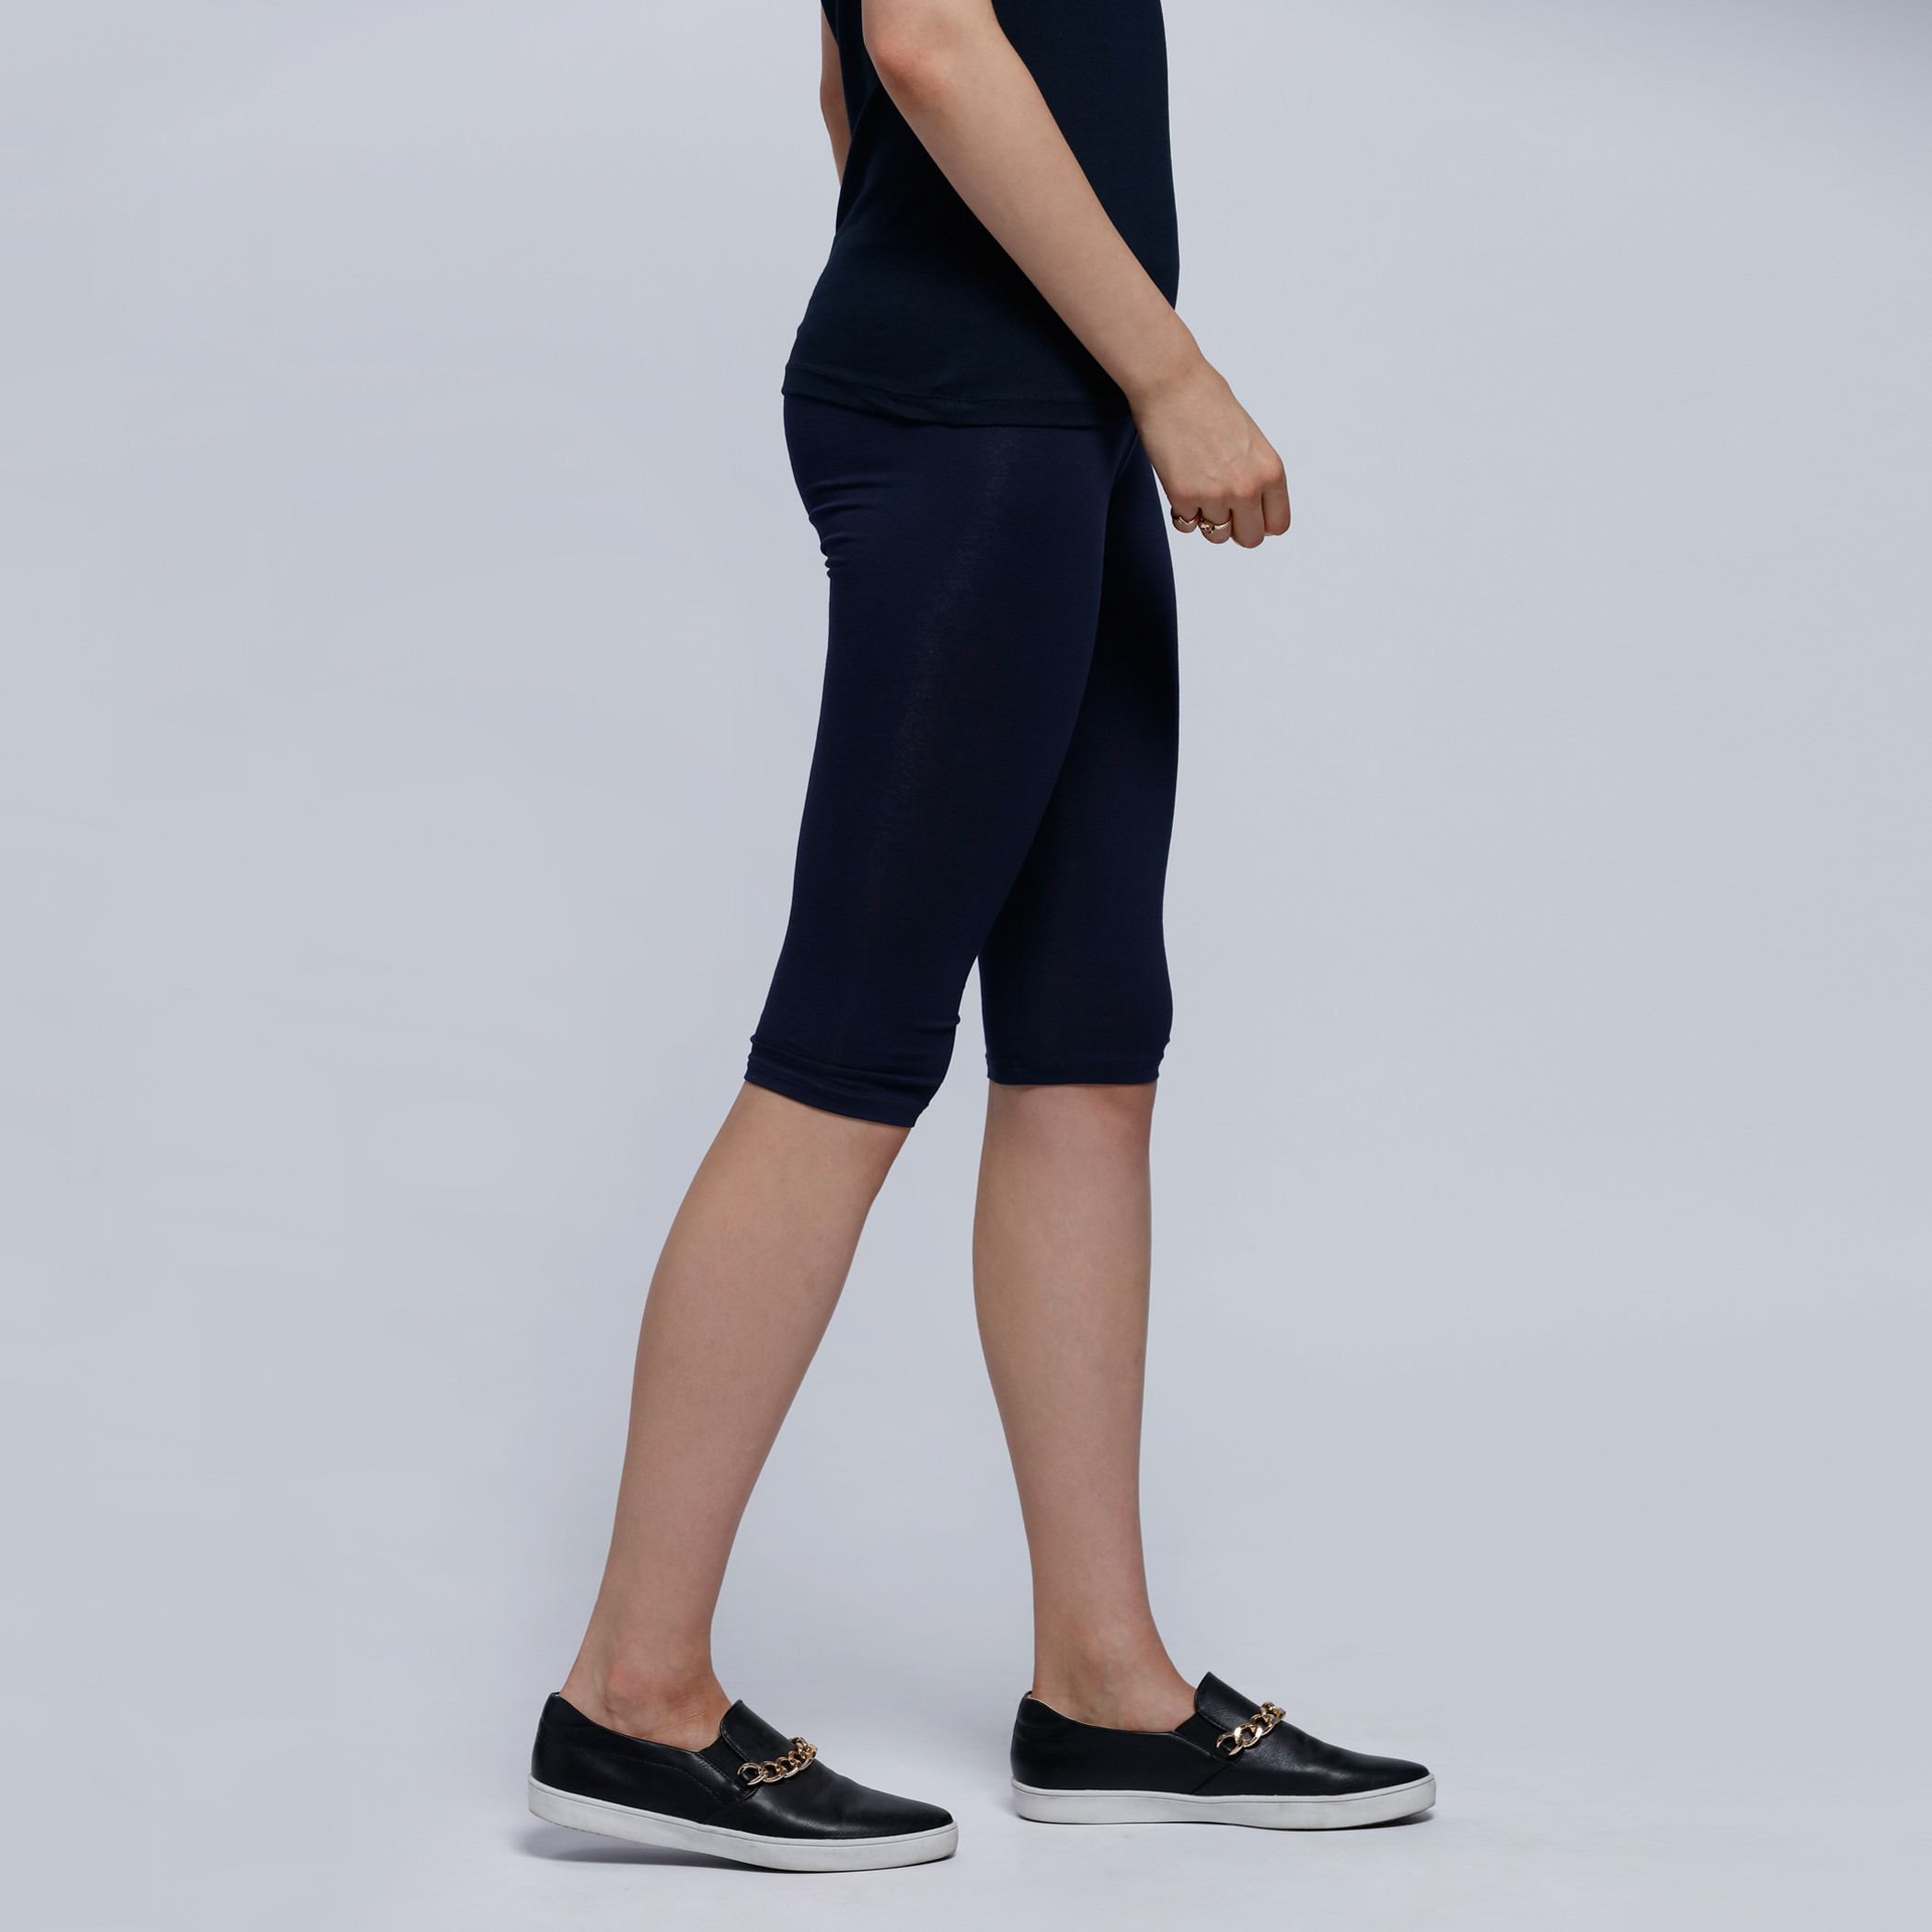 Amazon.com : Cartoon Owl Knee Length Leggings for Women High Waist Workout  Yoga Biker Shorts with Pockets S : Sports & Outdoors